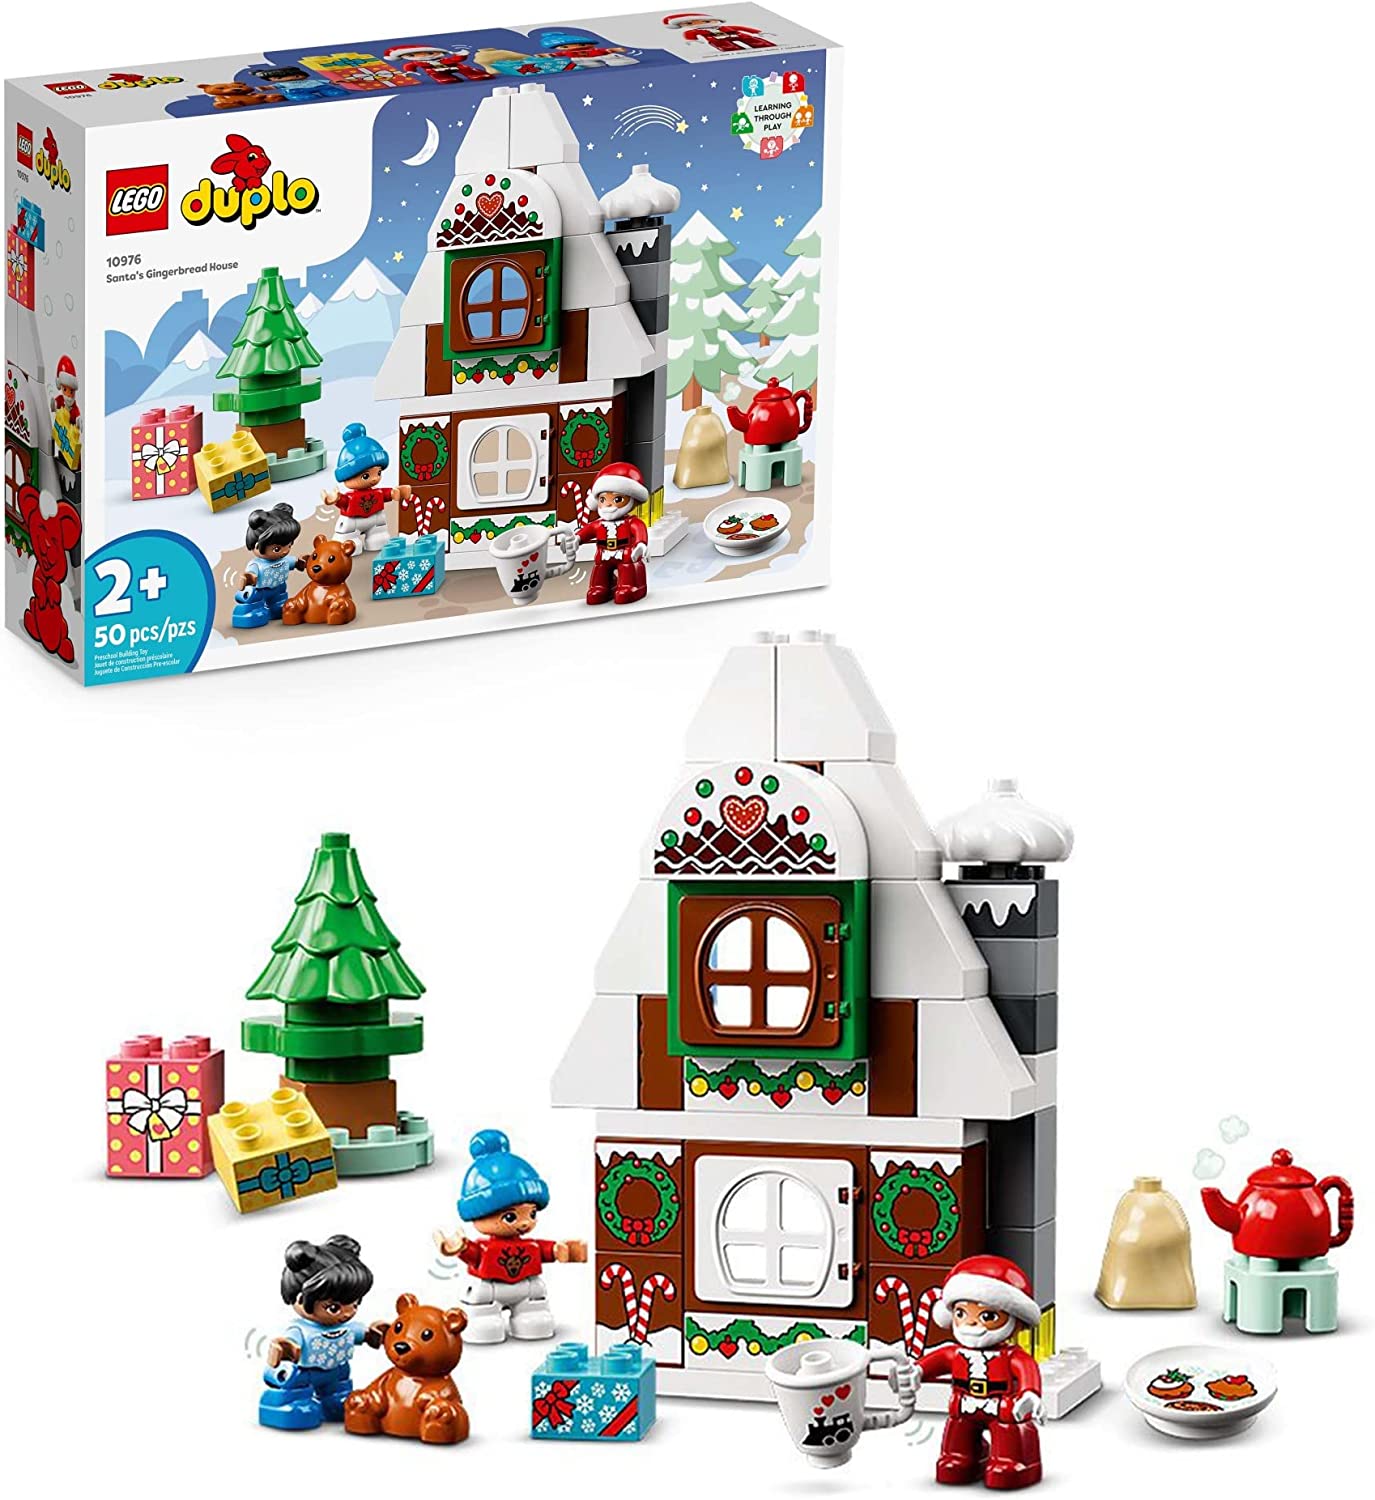 Santa's Gingerbread House 10976 Building Toy Set for Kids